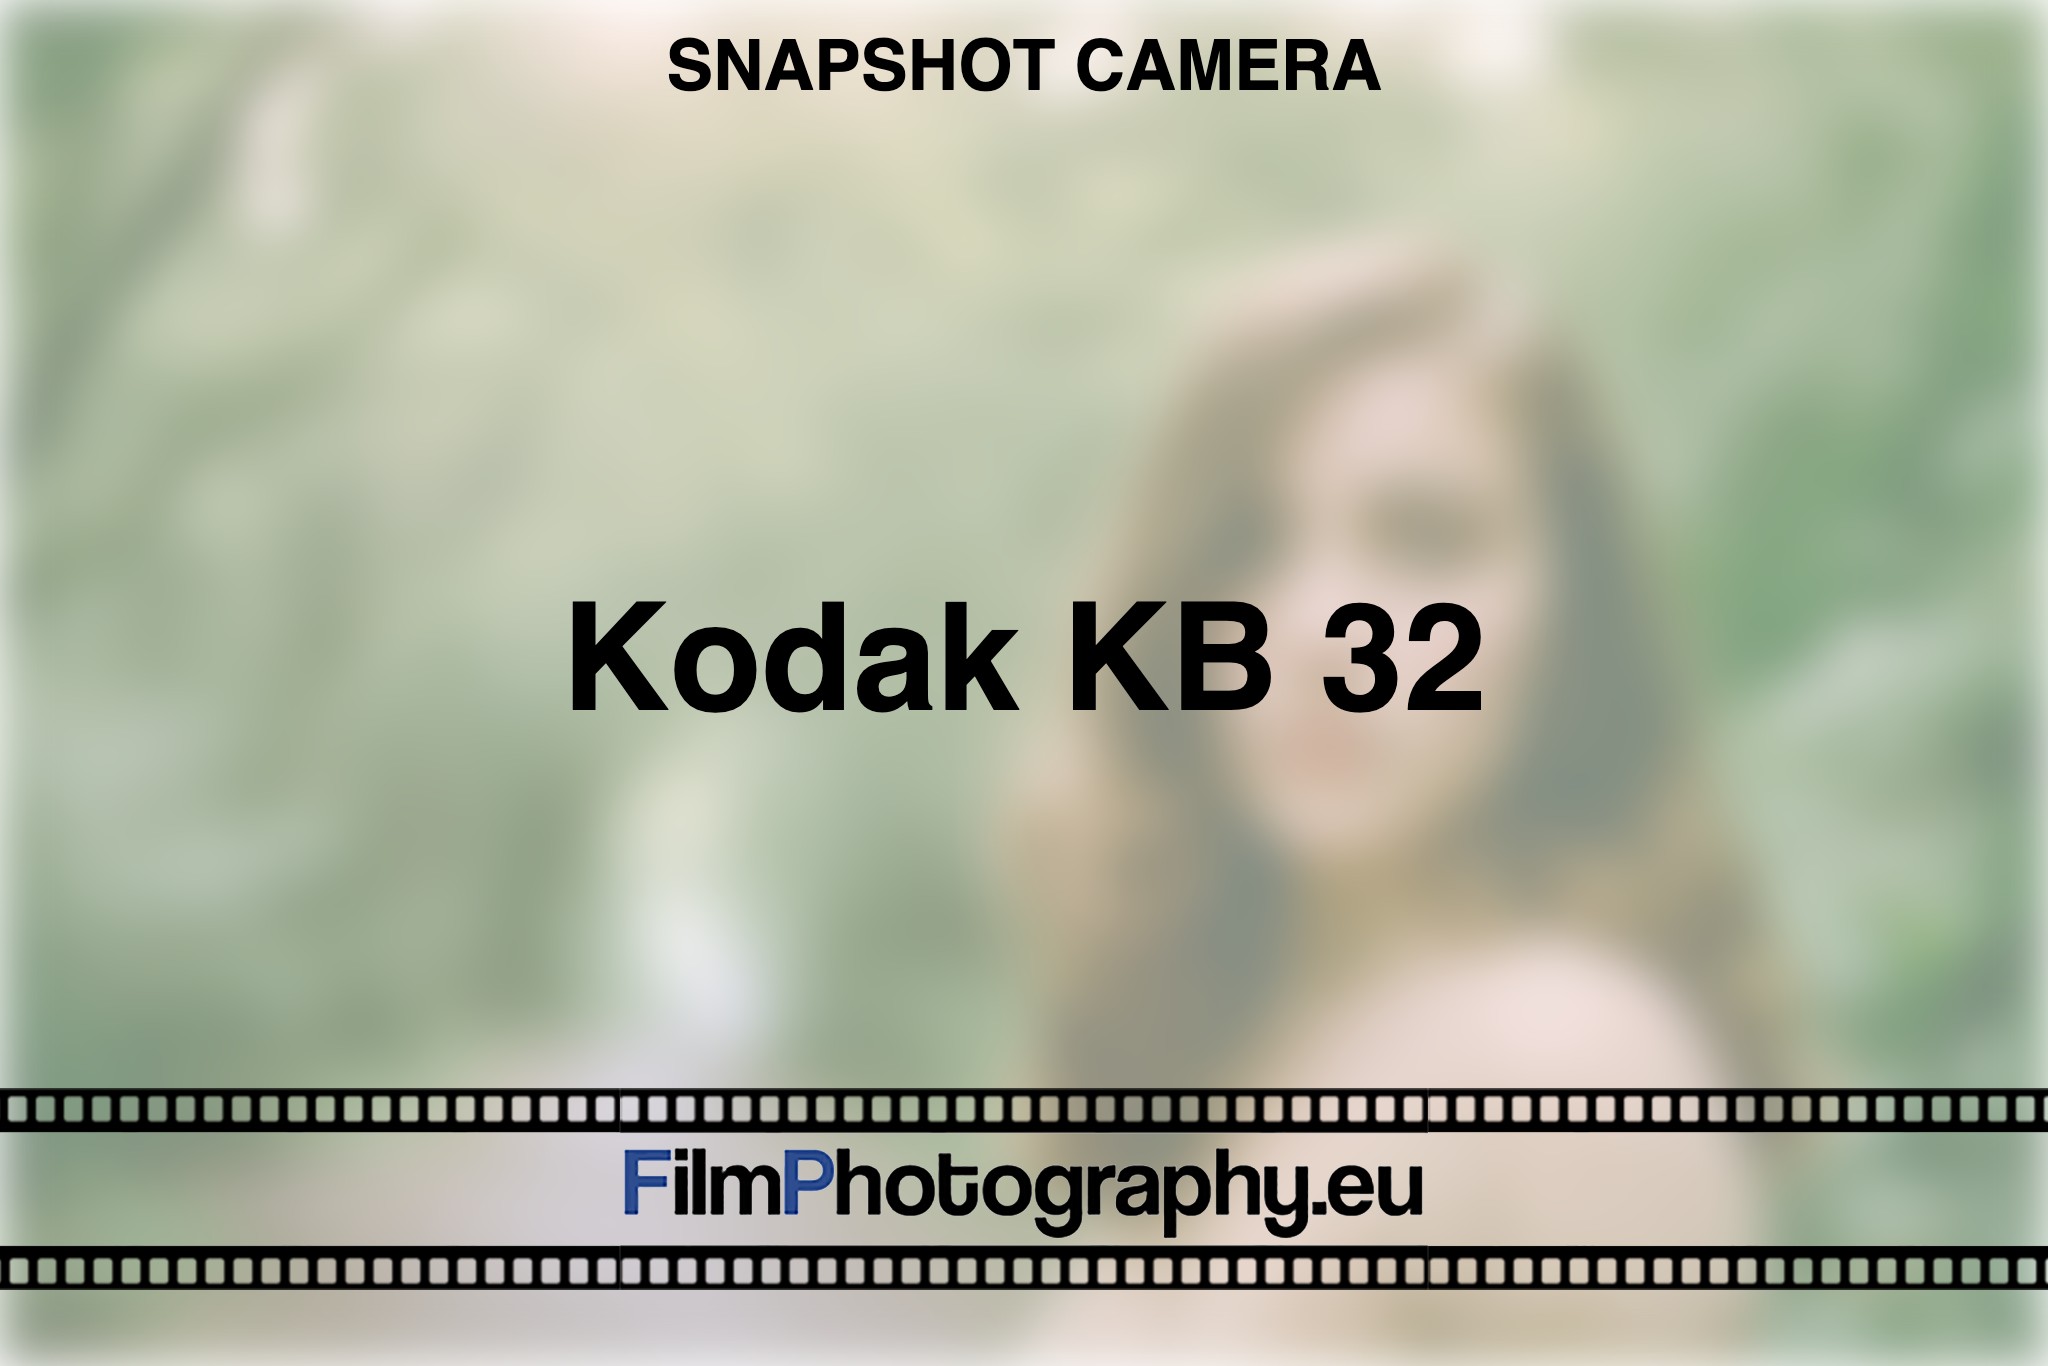 Kodak KB 32 Info about Films, Battery and the Camera